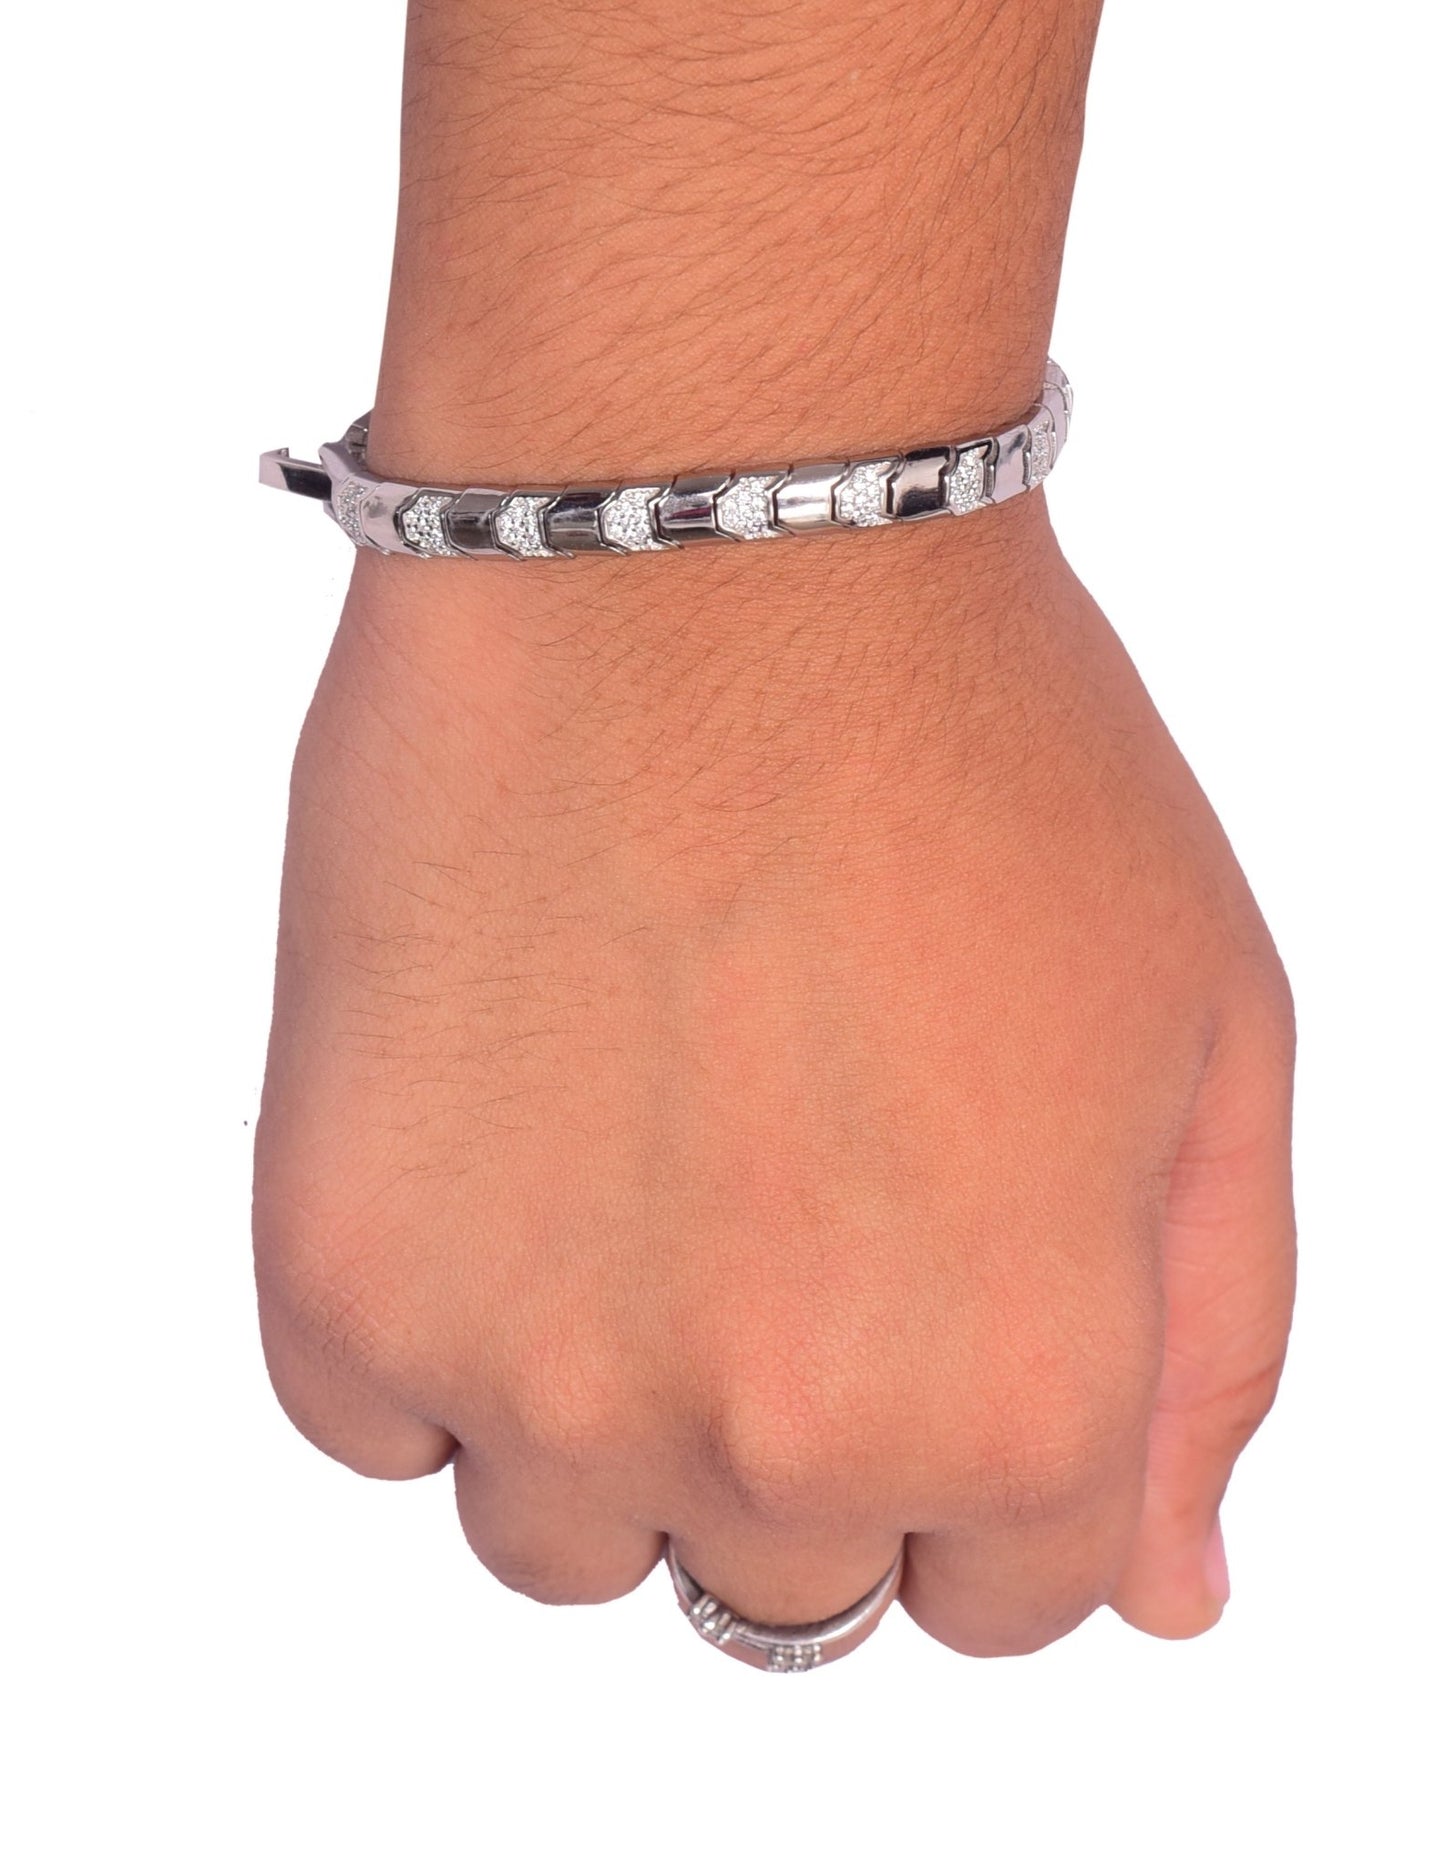 Unisex Bracelets in Solid Silver | 925 Silver Rhodium Plating | Gender-Neutral Wristwear - Indique